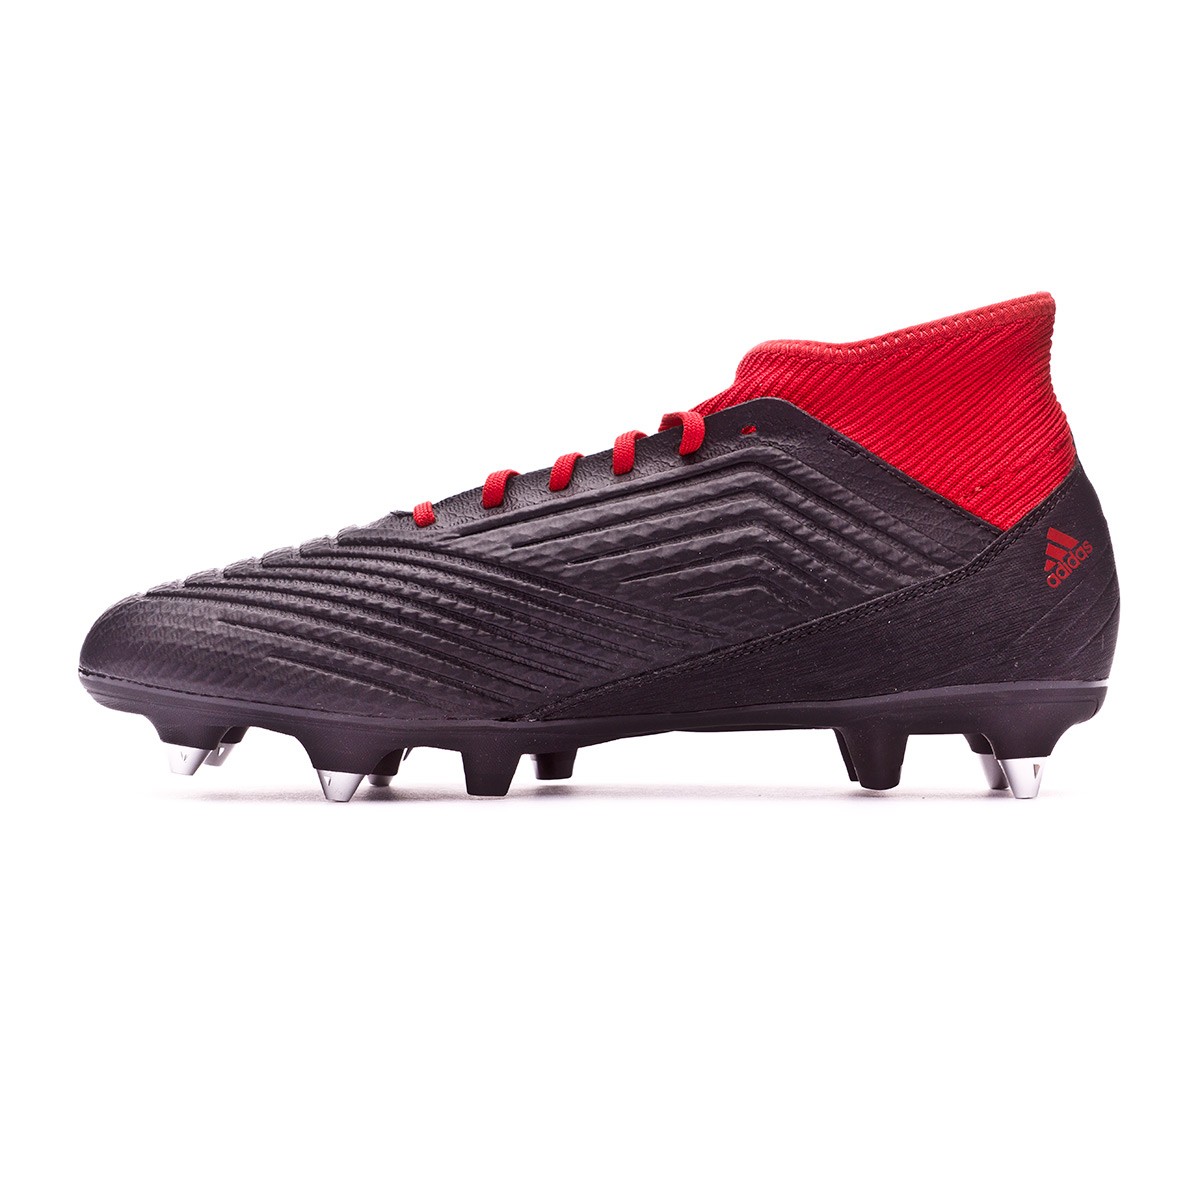 adidas predator 18.3 red and black